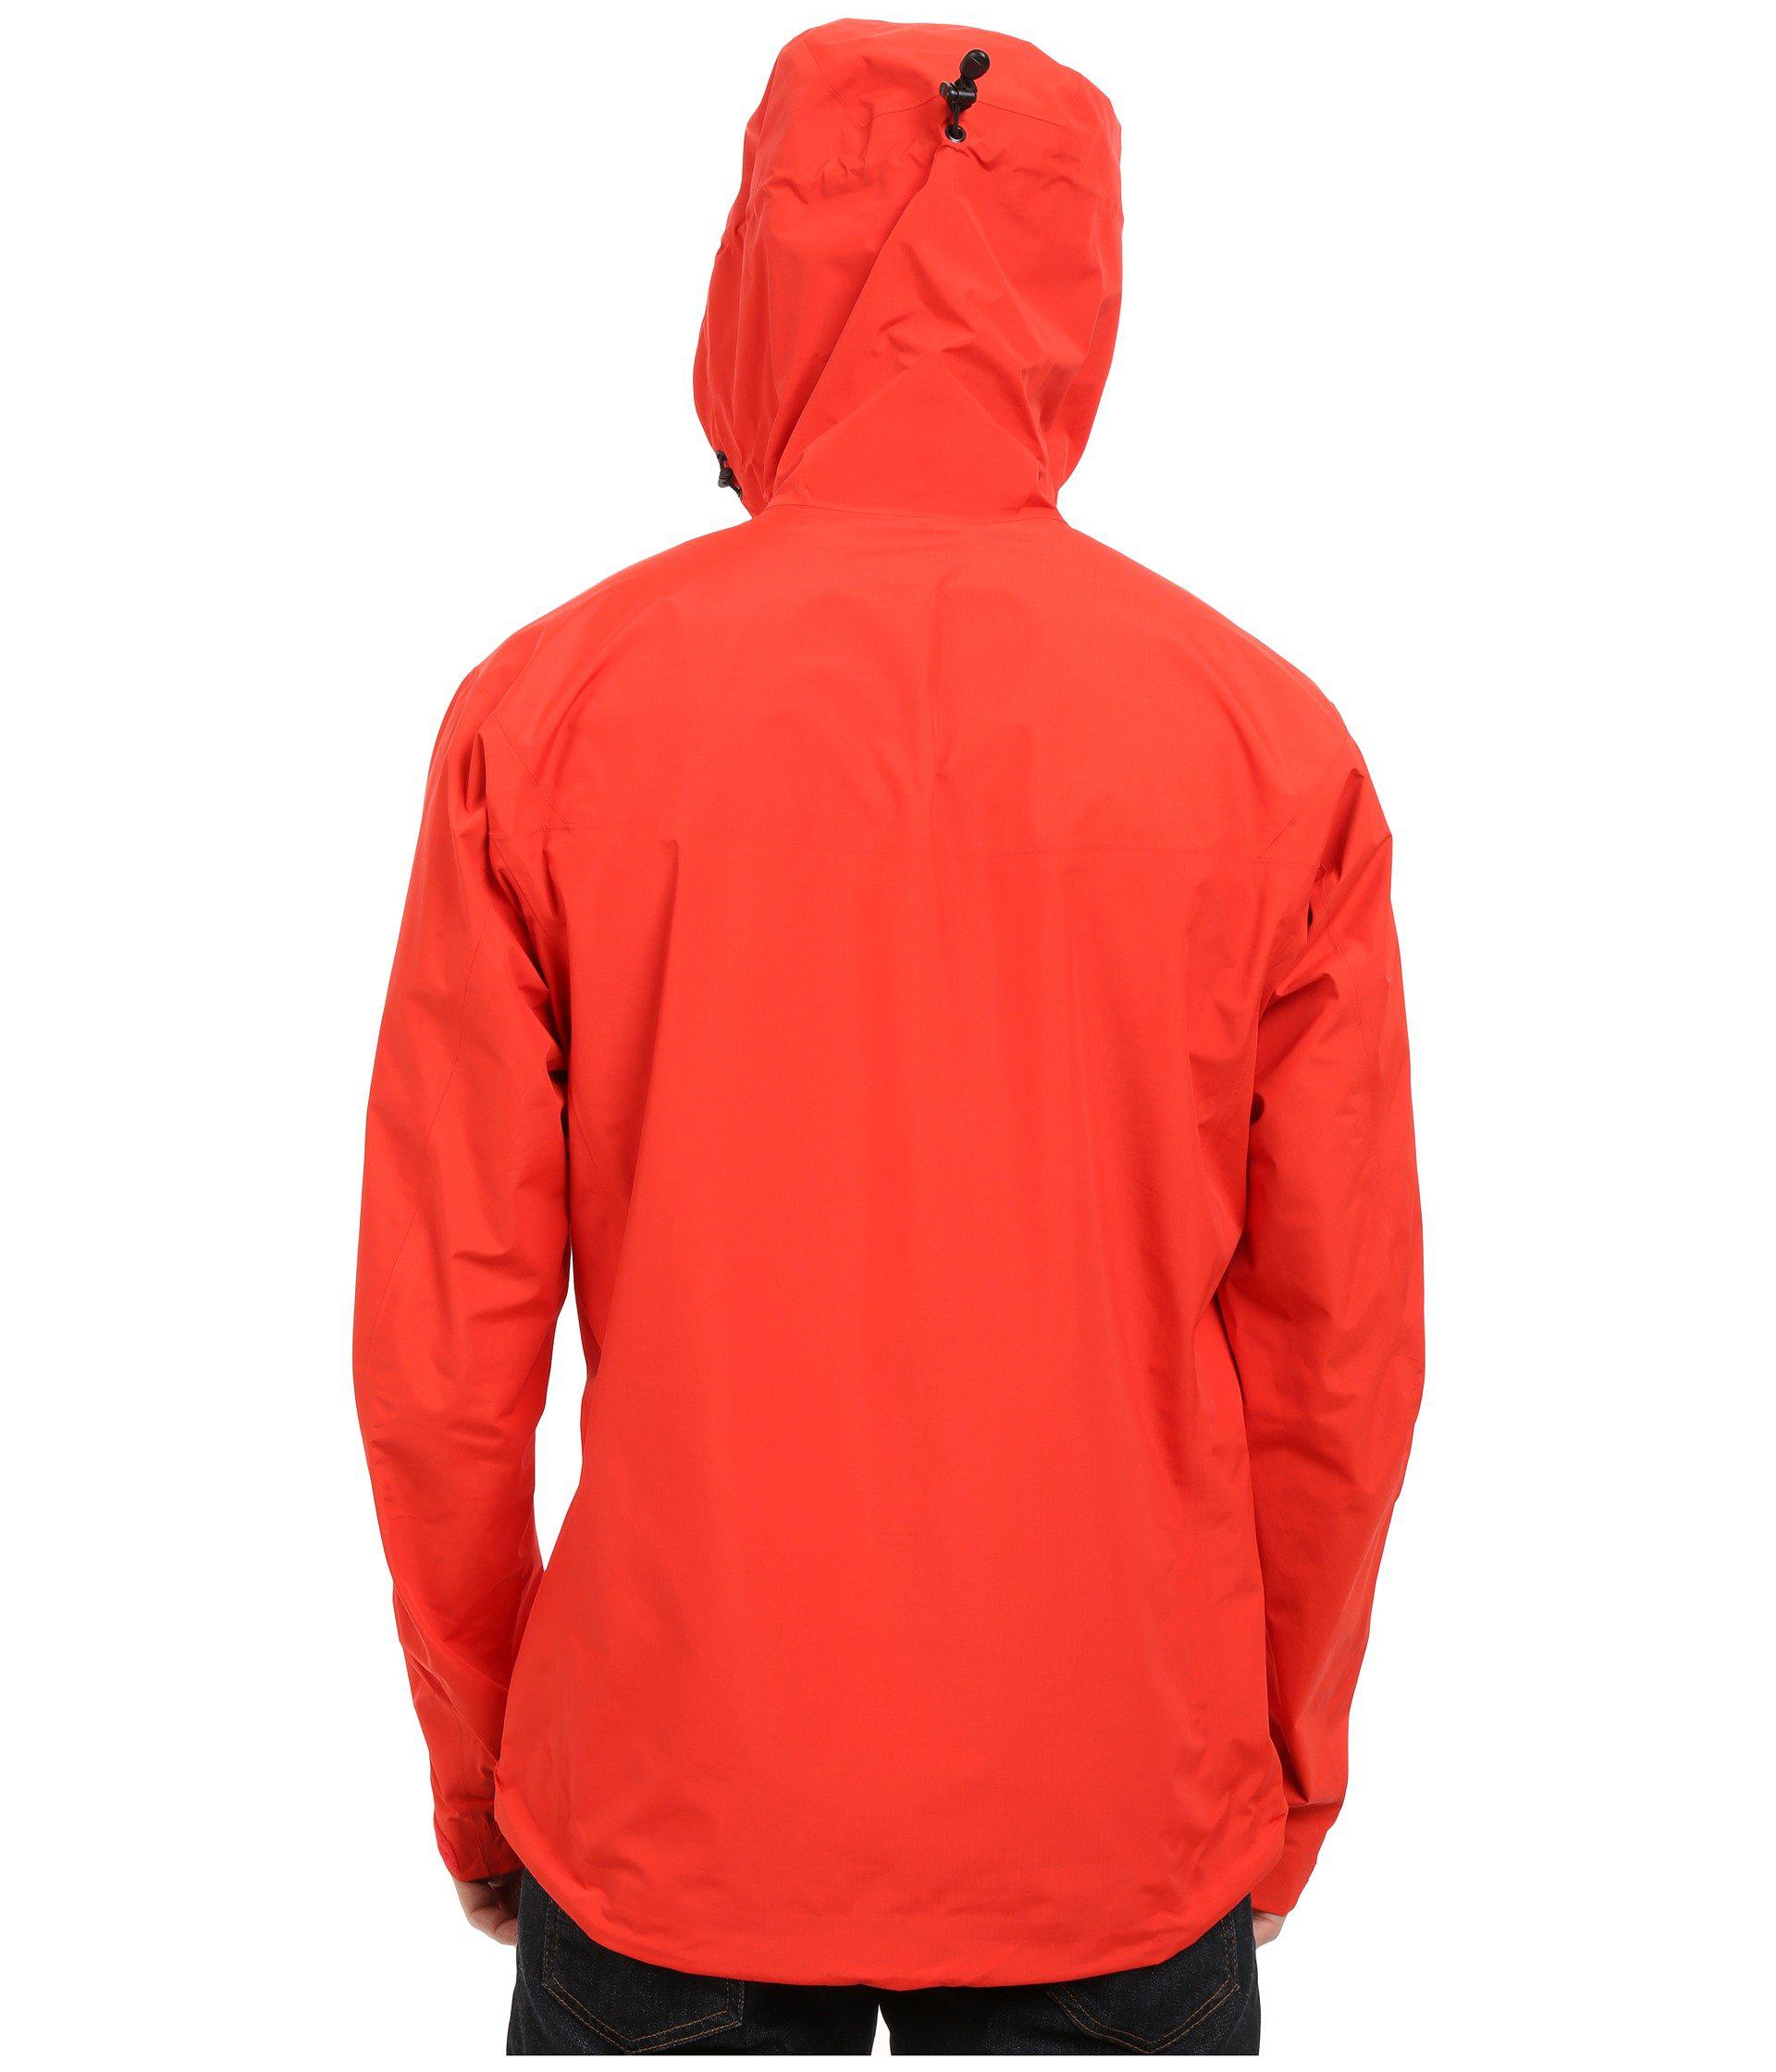 Arc'teryx Alpha Sl Jacket in Orange for Men - Lyst